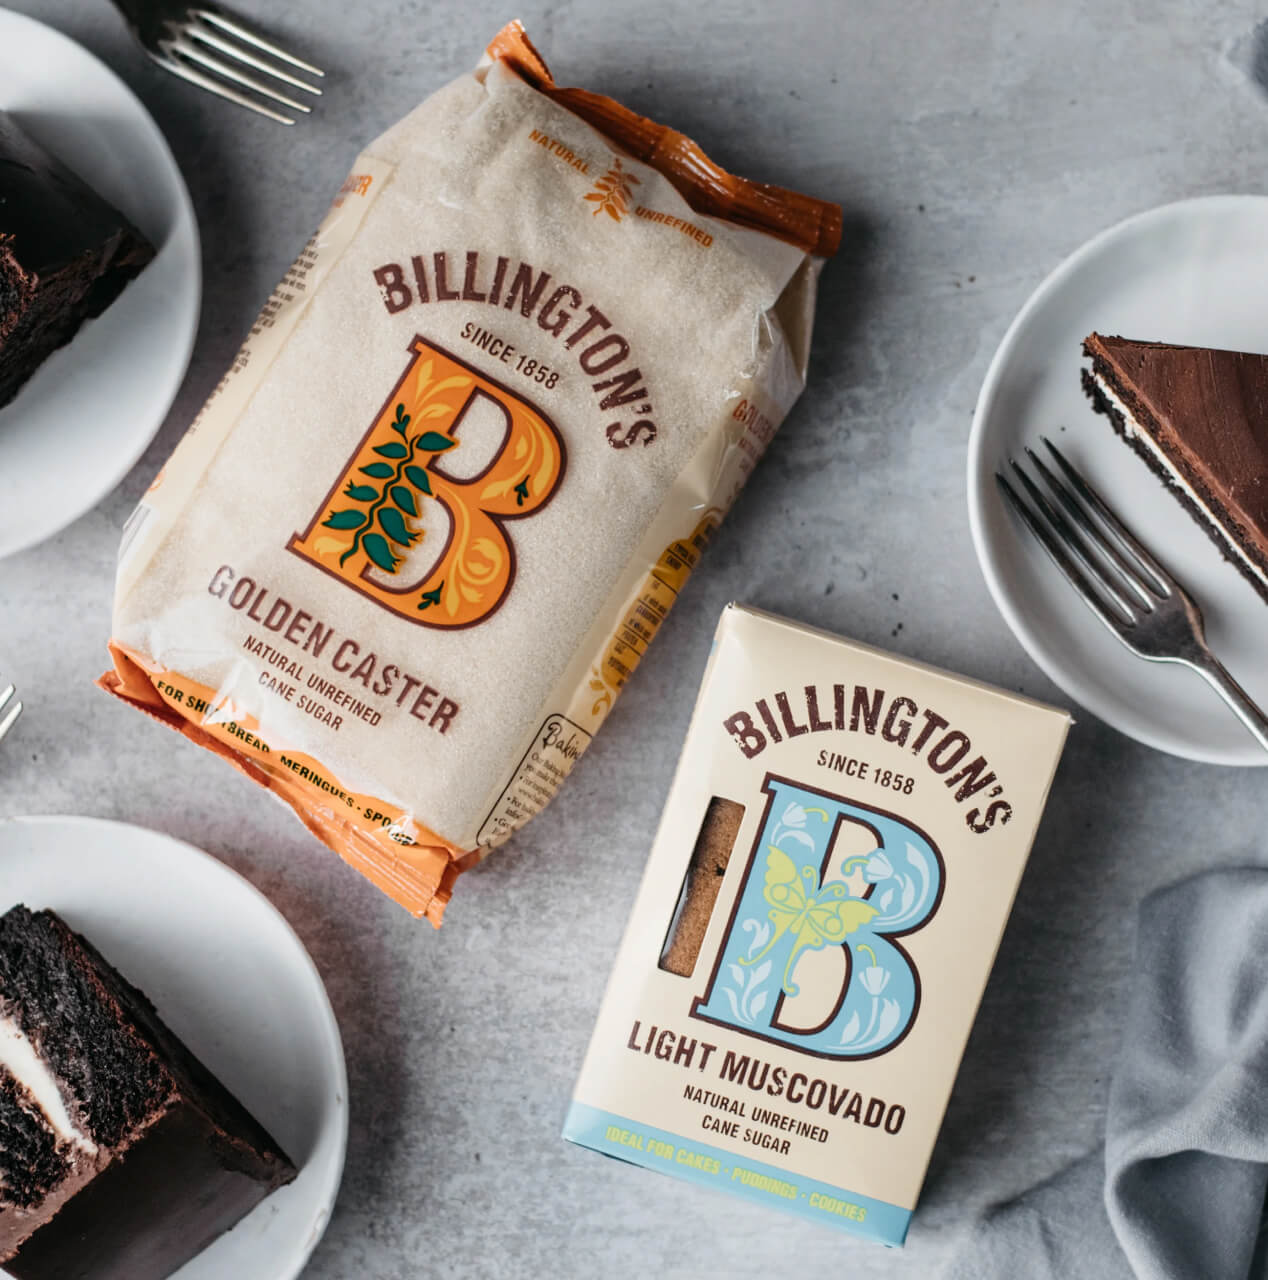 Billington's sugars alongside slices of rich chocolate cake.